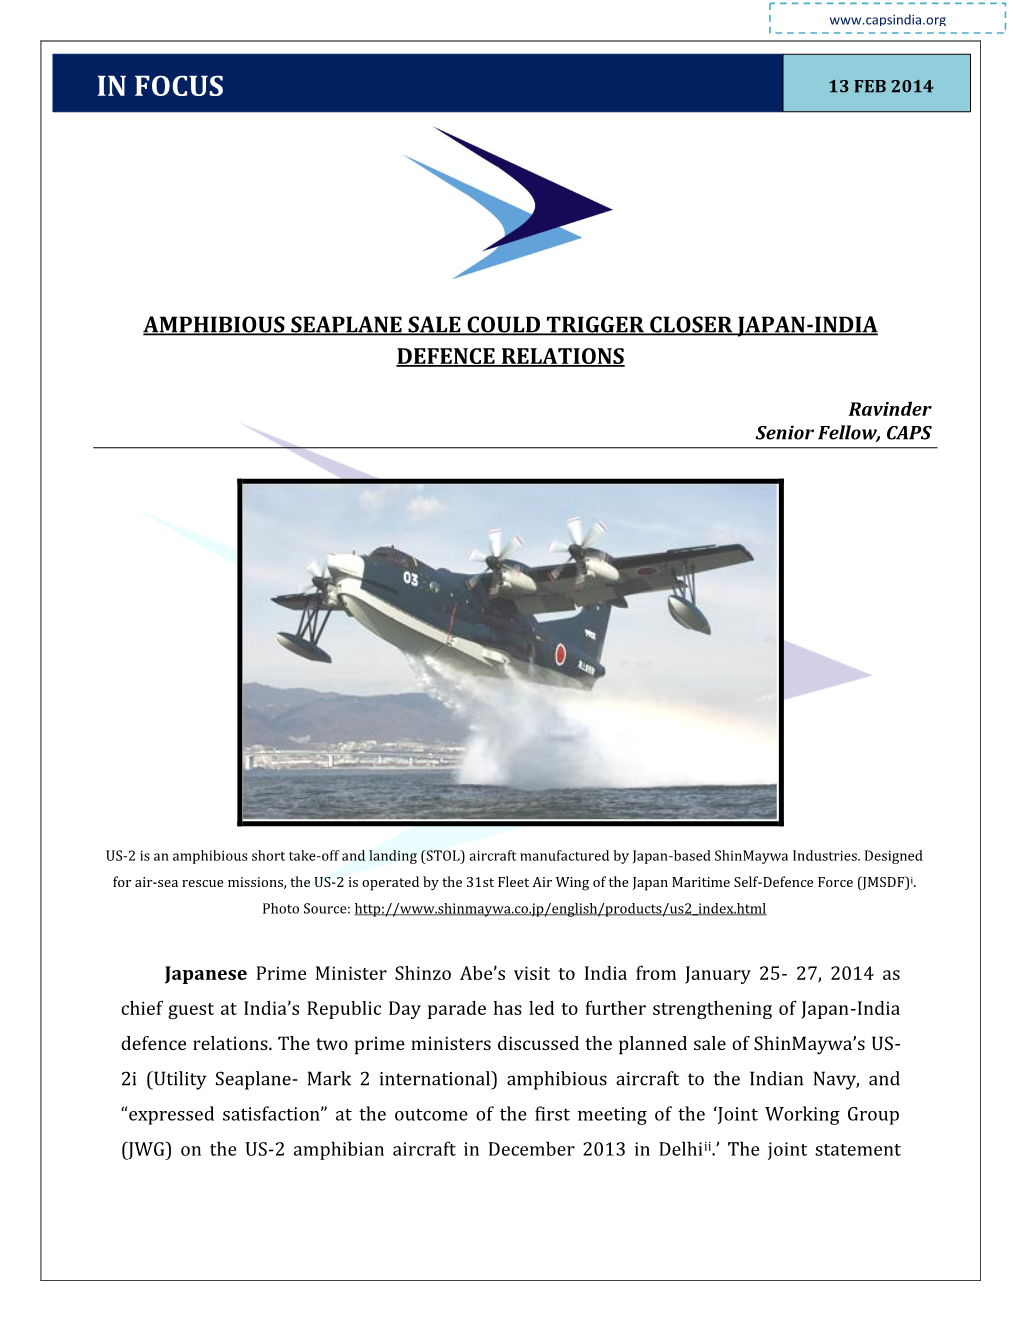 Amphibious Seaplane Sale Could Trigger Closer Japan-India Defence Relations